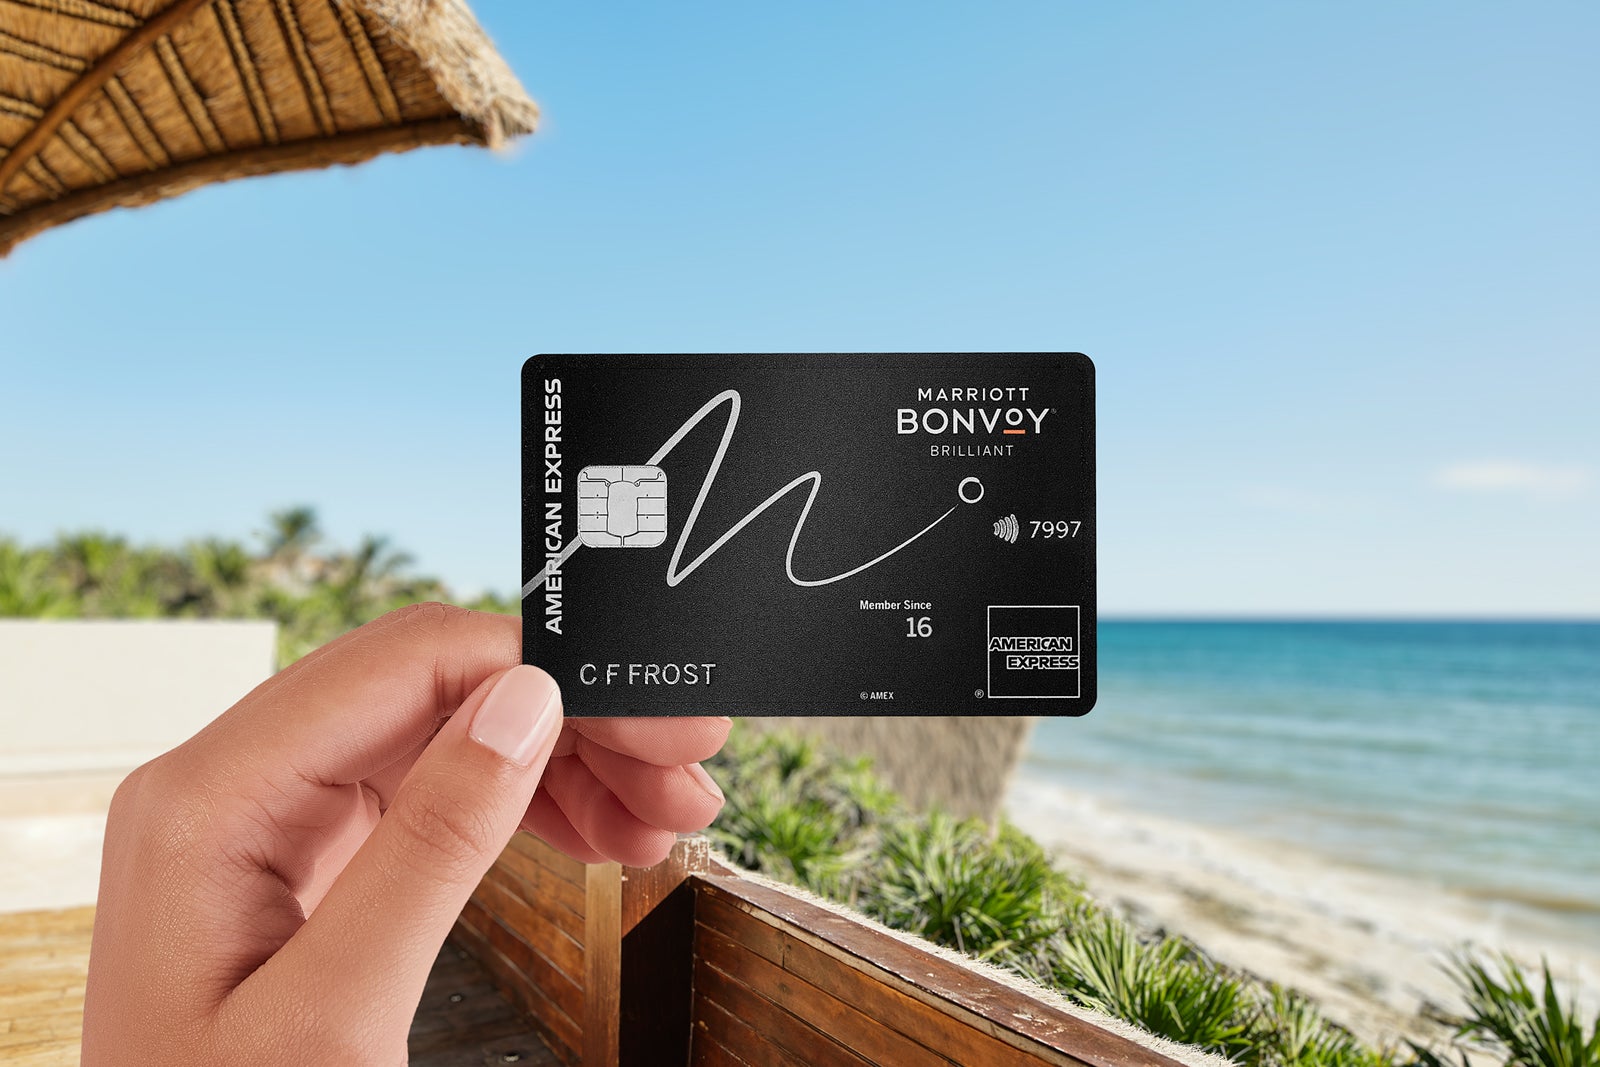 a hand holds a credit card near a beach